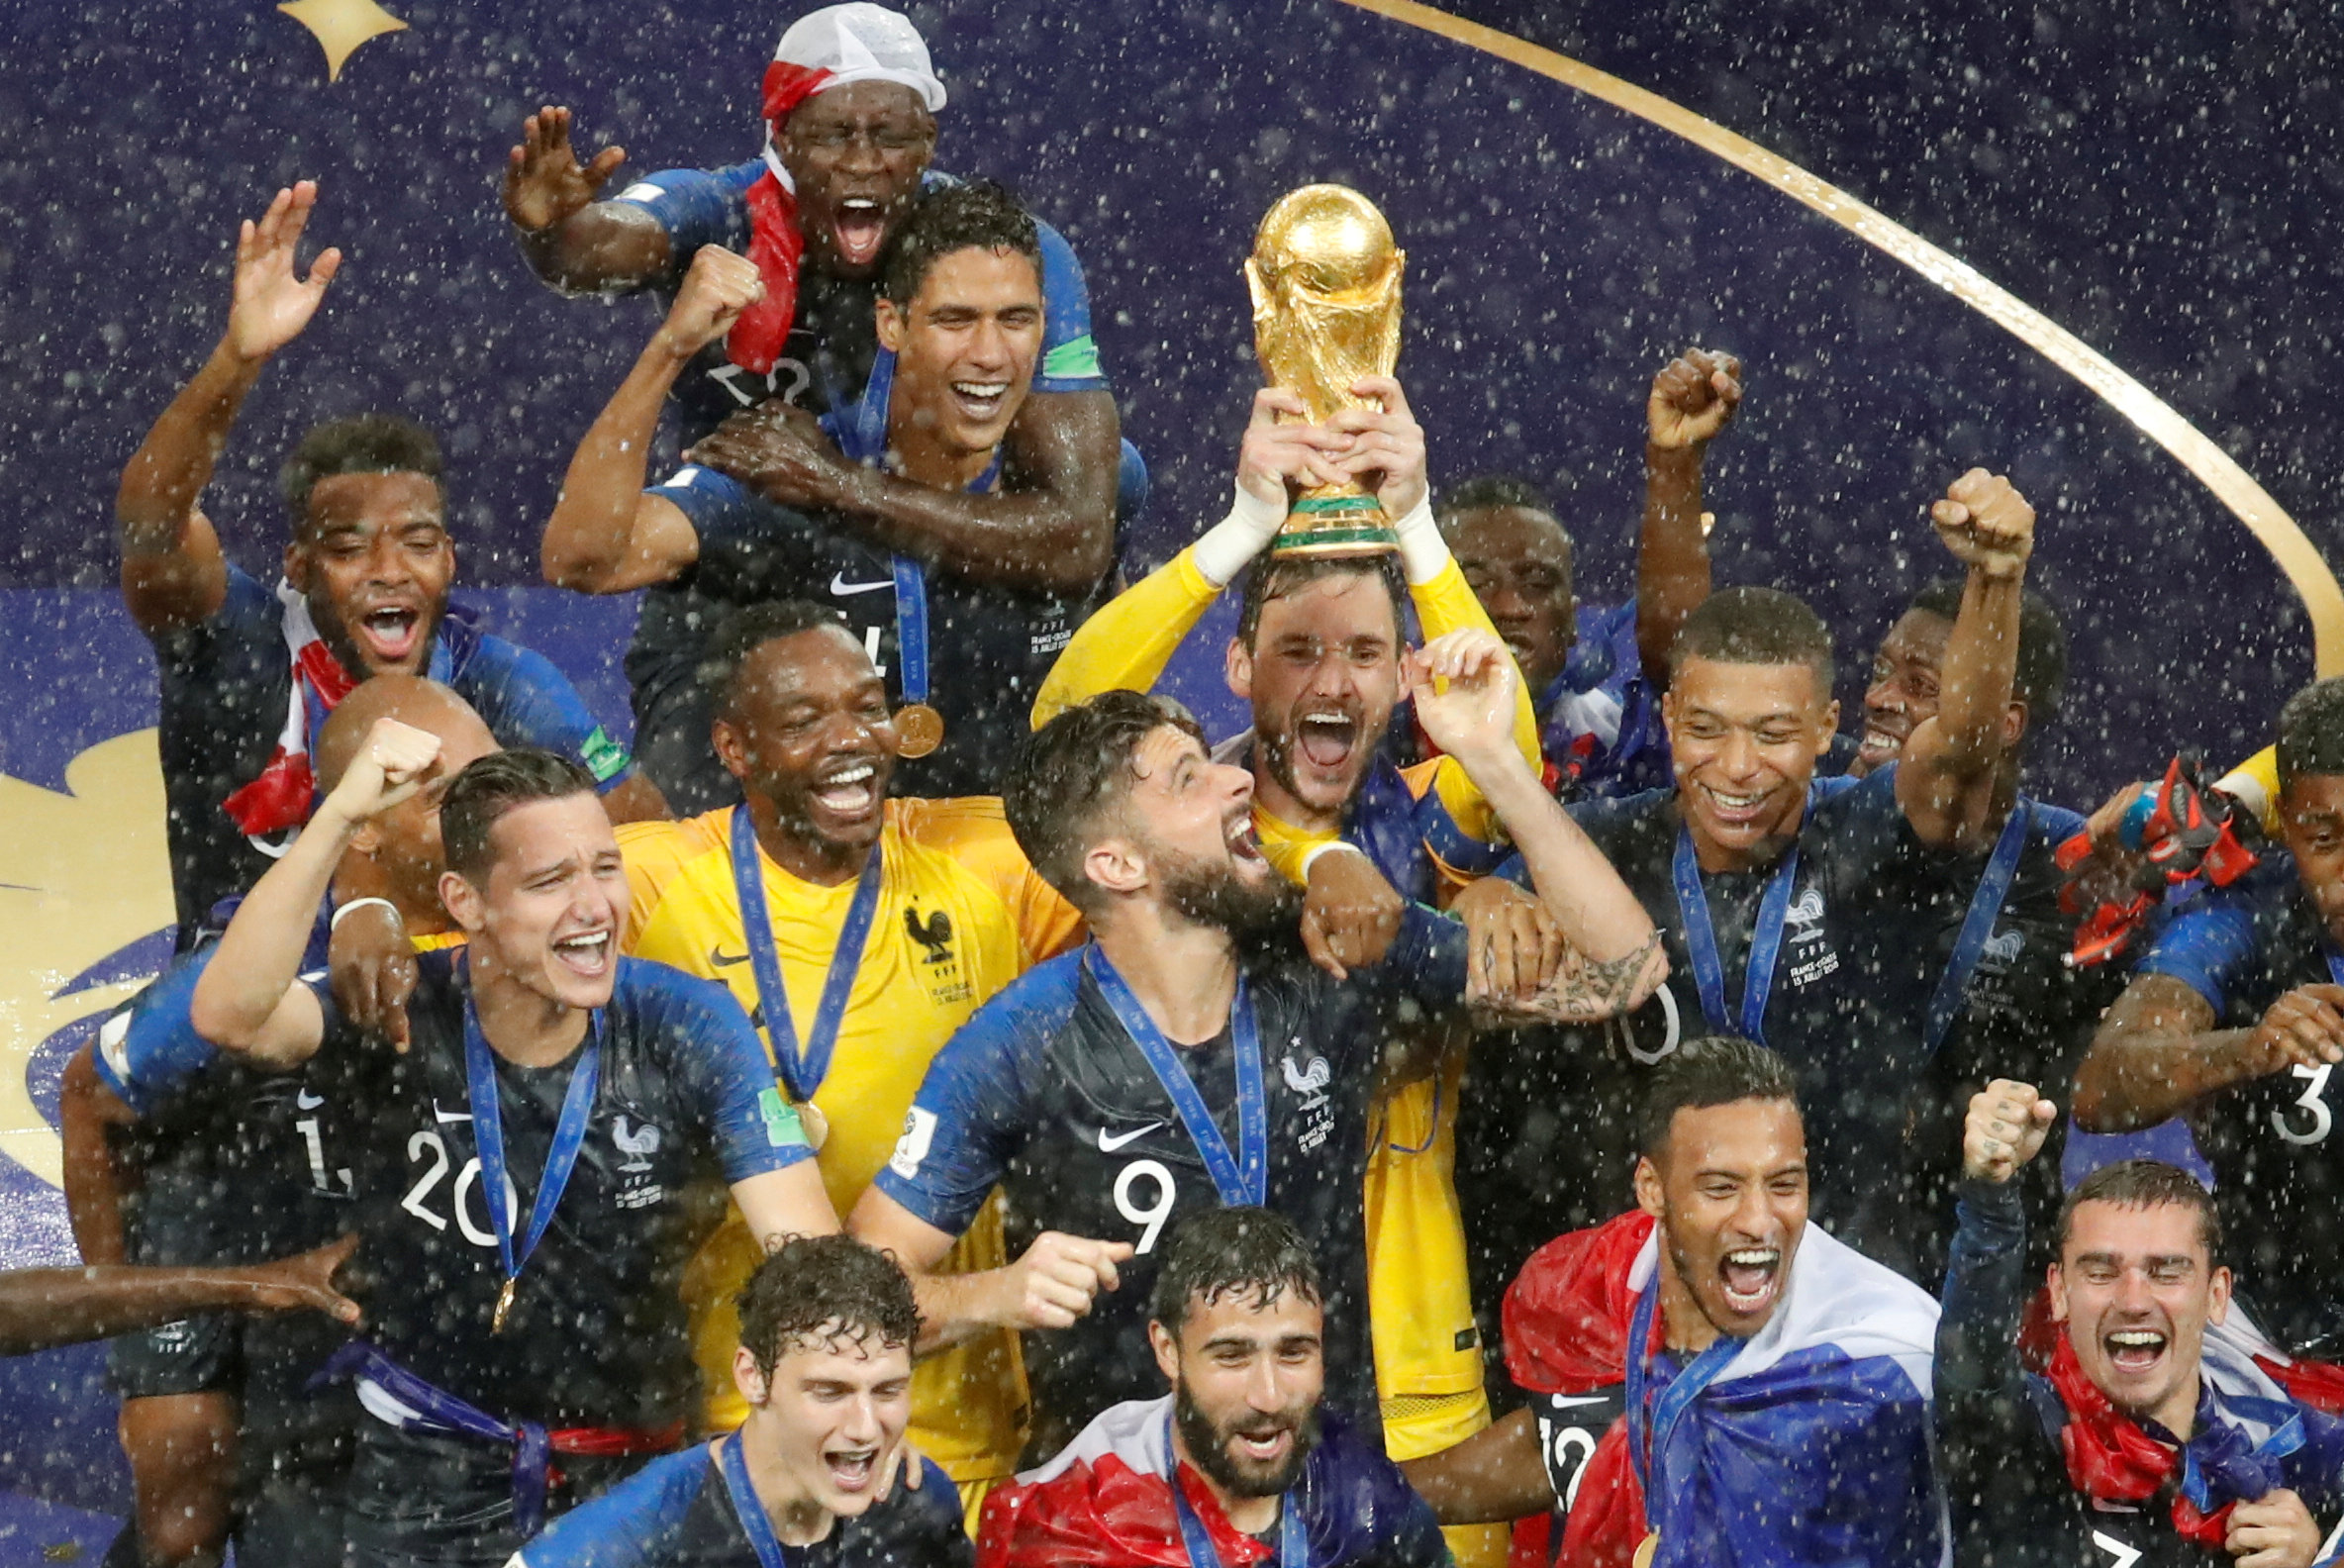 Football: France lift second World Cup after winning classic final